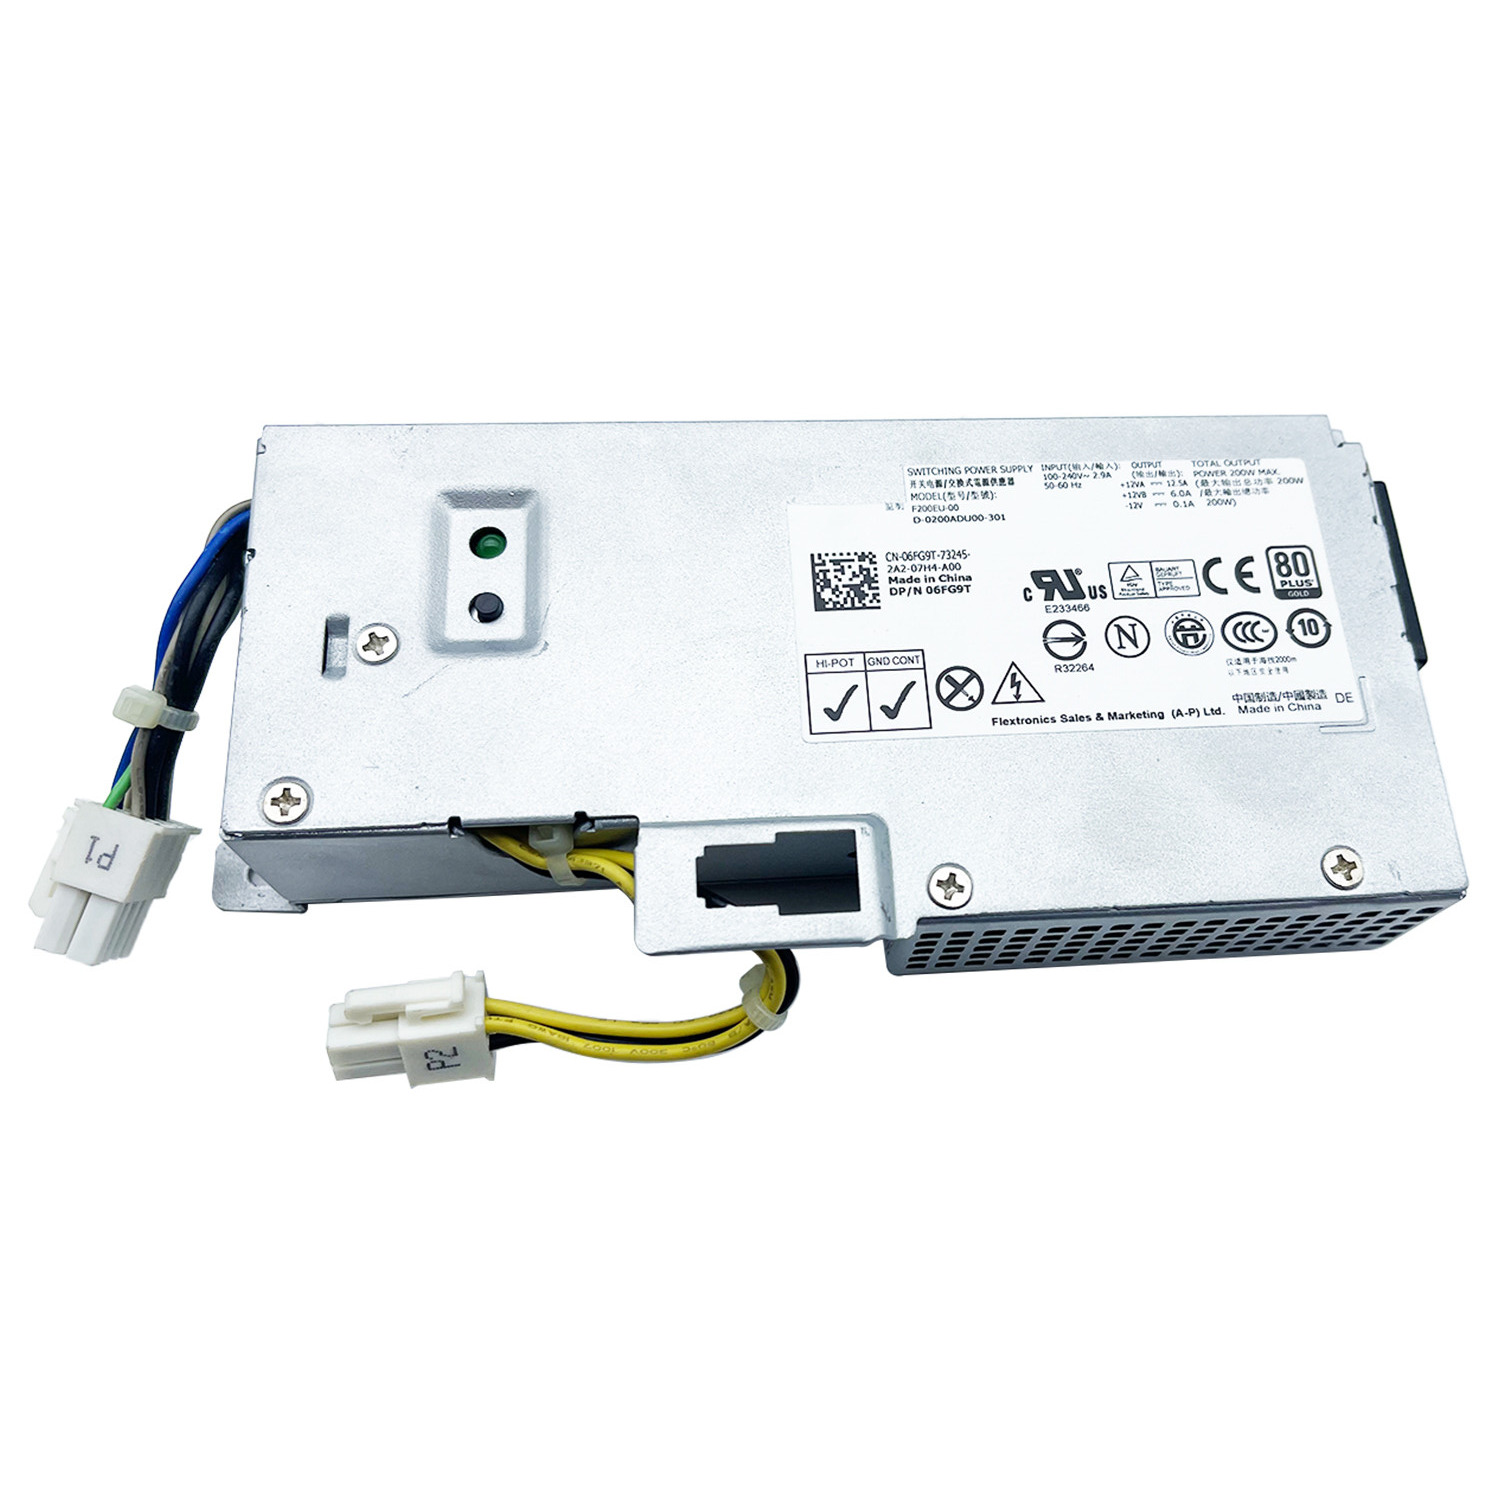 PSU Power Supply Unit 1VCY4 L200EU-00 200W For Dell Optiplex 780 790 990 USFF US